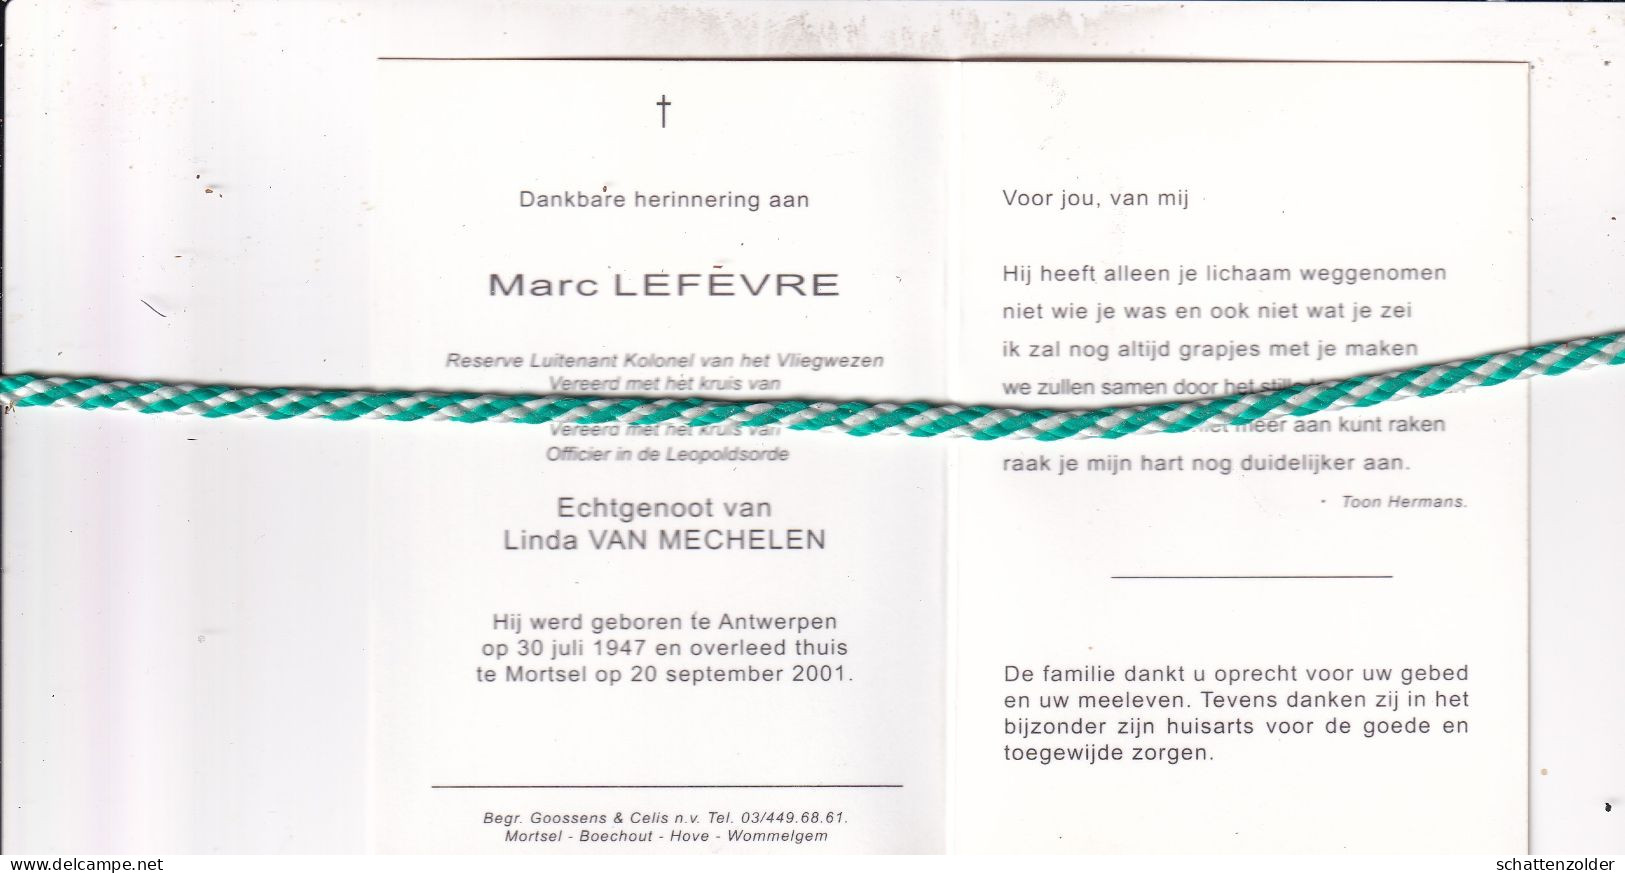 Marc Lefevre-Van Mechelen, Antwerpen 1947, Mortsel 2001. Reserve Luitenant Kolonel Vliegwezen. Foto - Décès